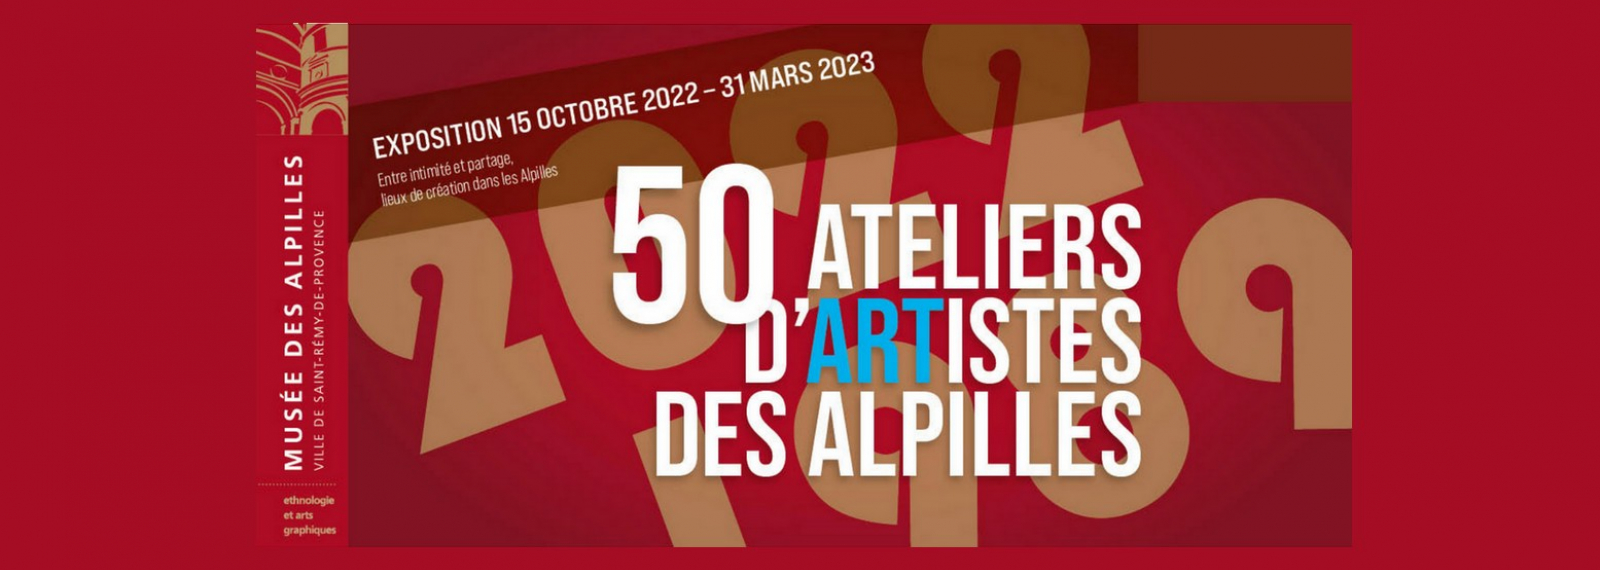 Exhibition: 50 artists' studios in the Alpilles